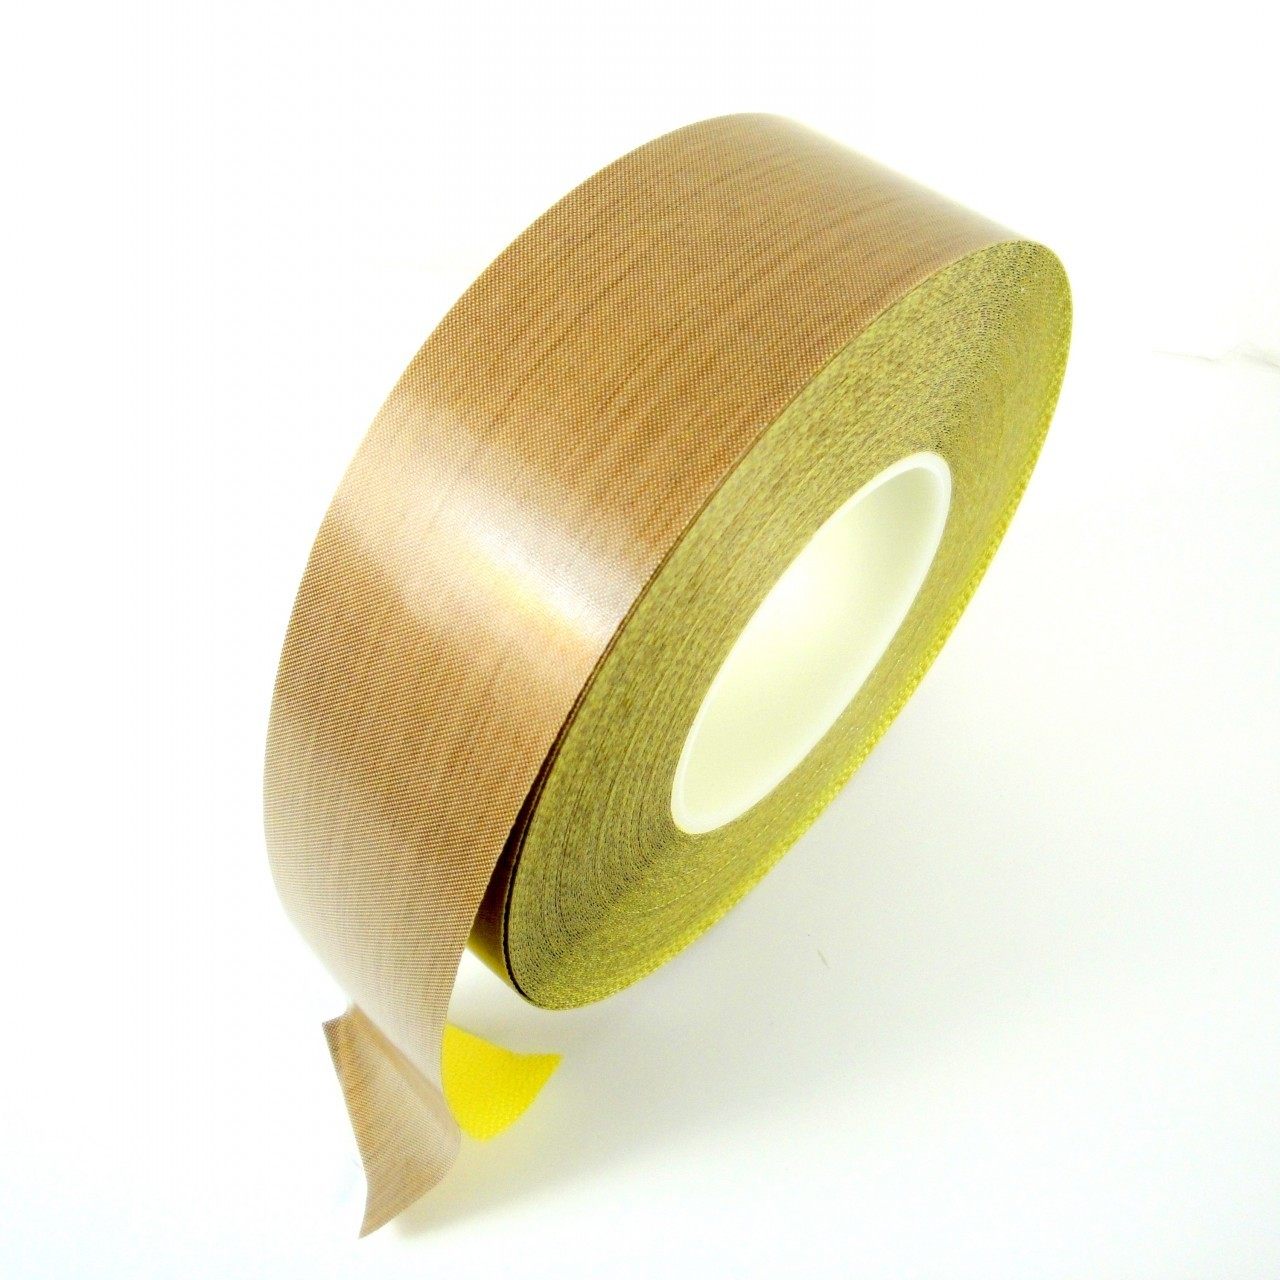 Color Carton Sealing Tape 2.0 Mil (6120)